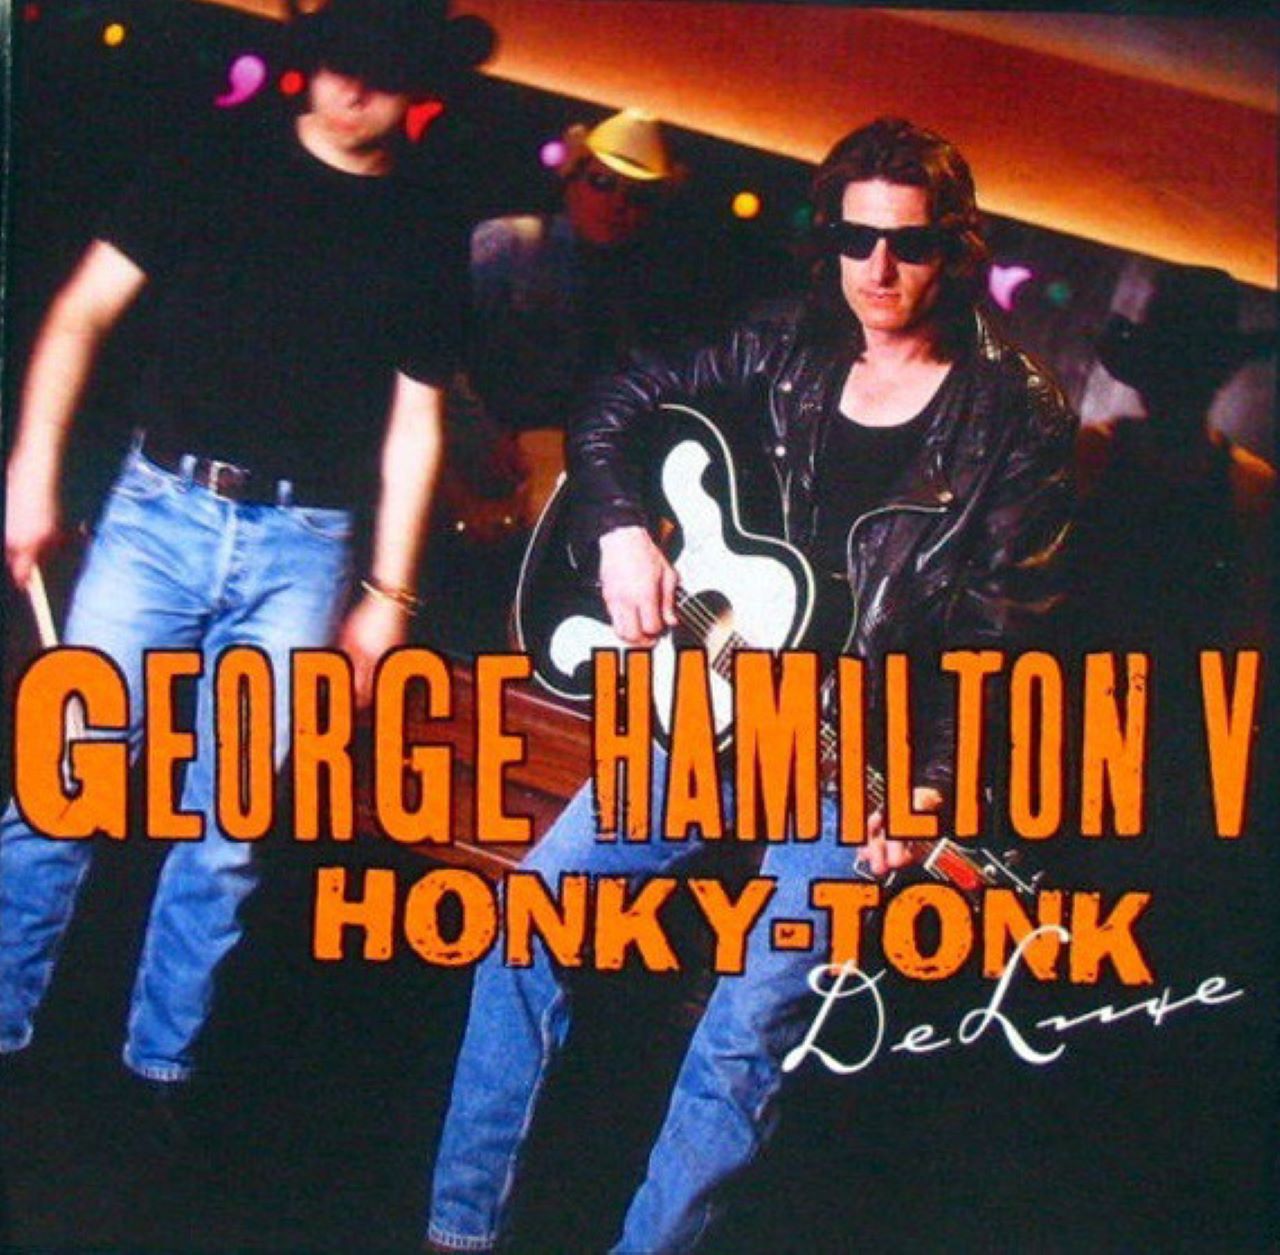 George Hamilton V - Honky Tonk Deluxe cover album